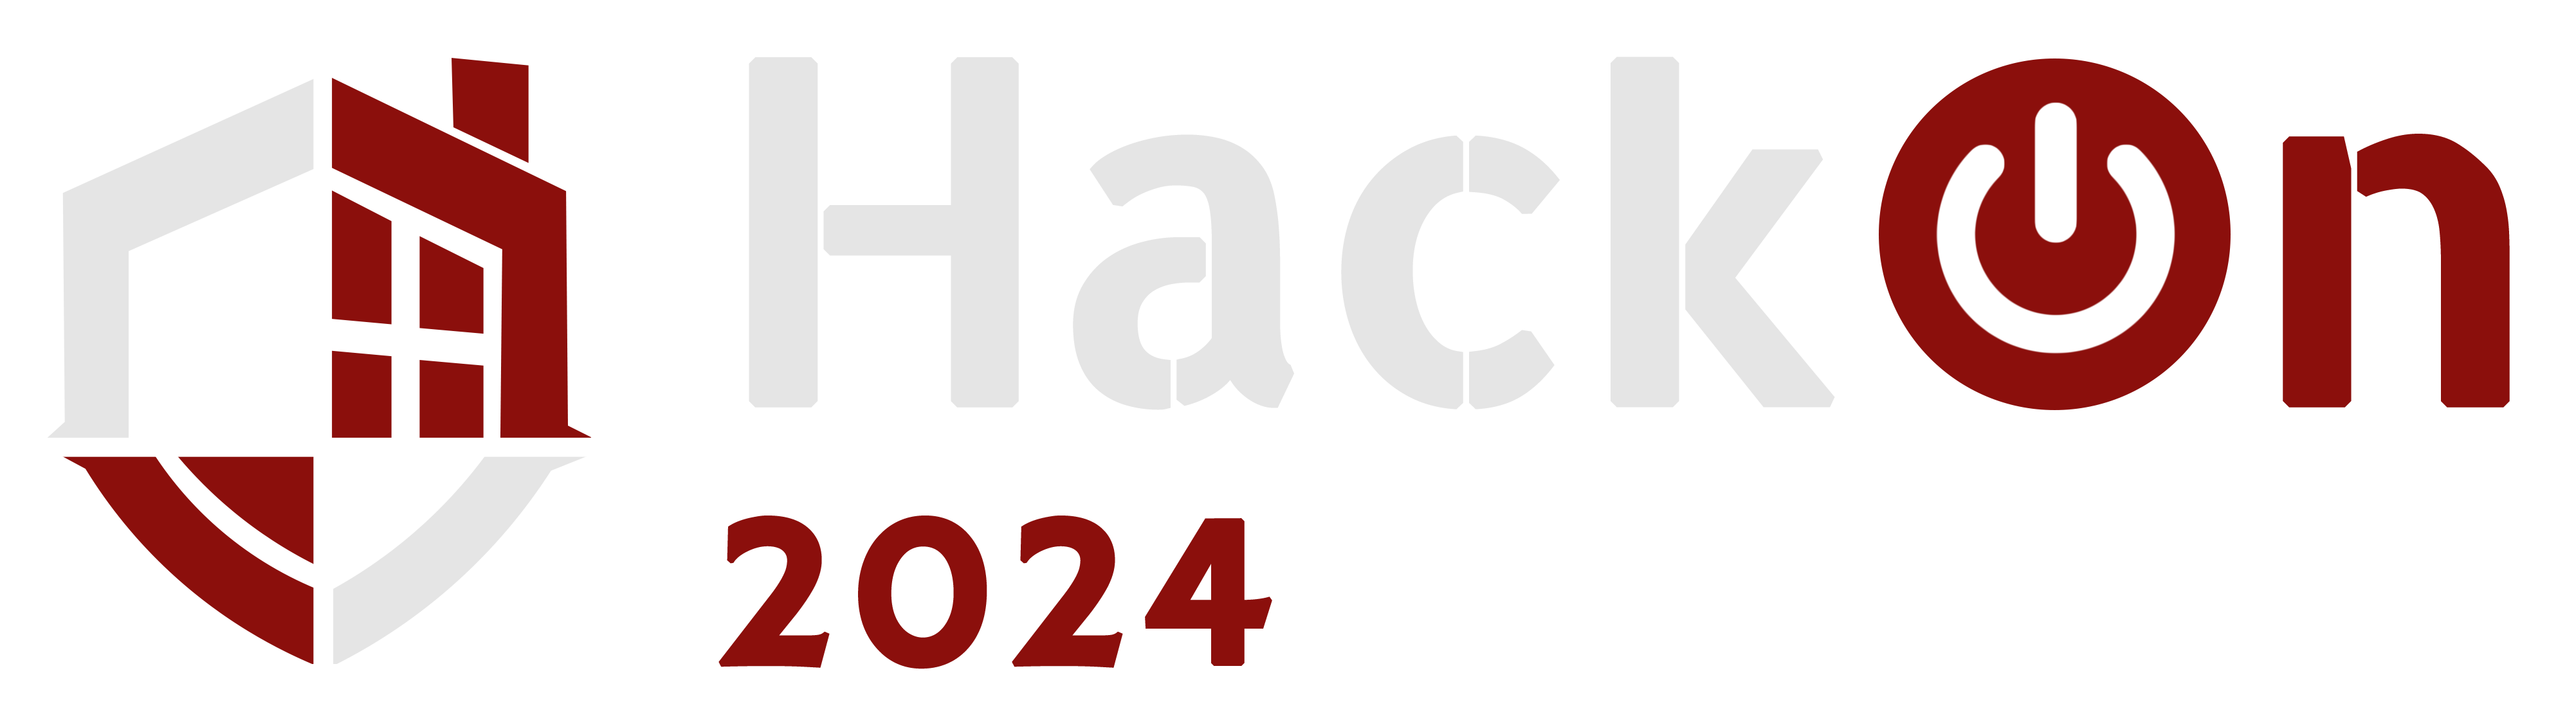 Logo HackOn 2023 horizontal